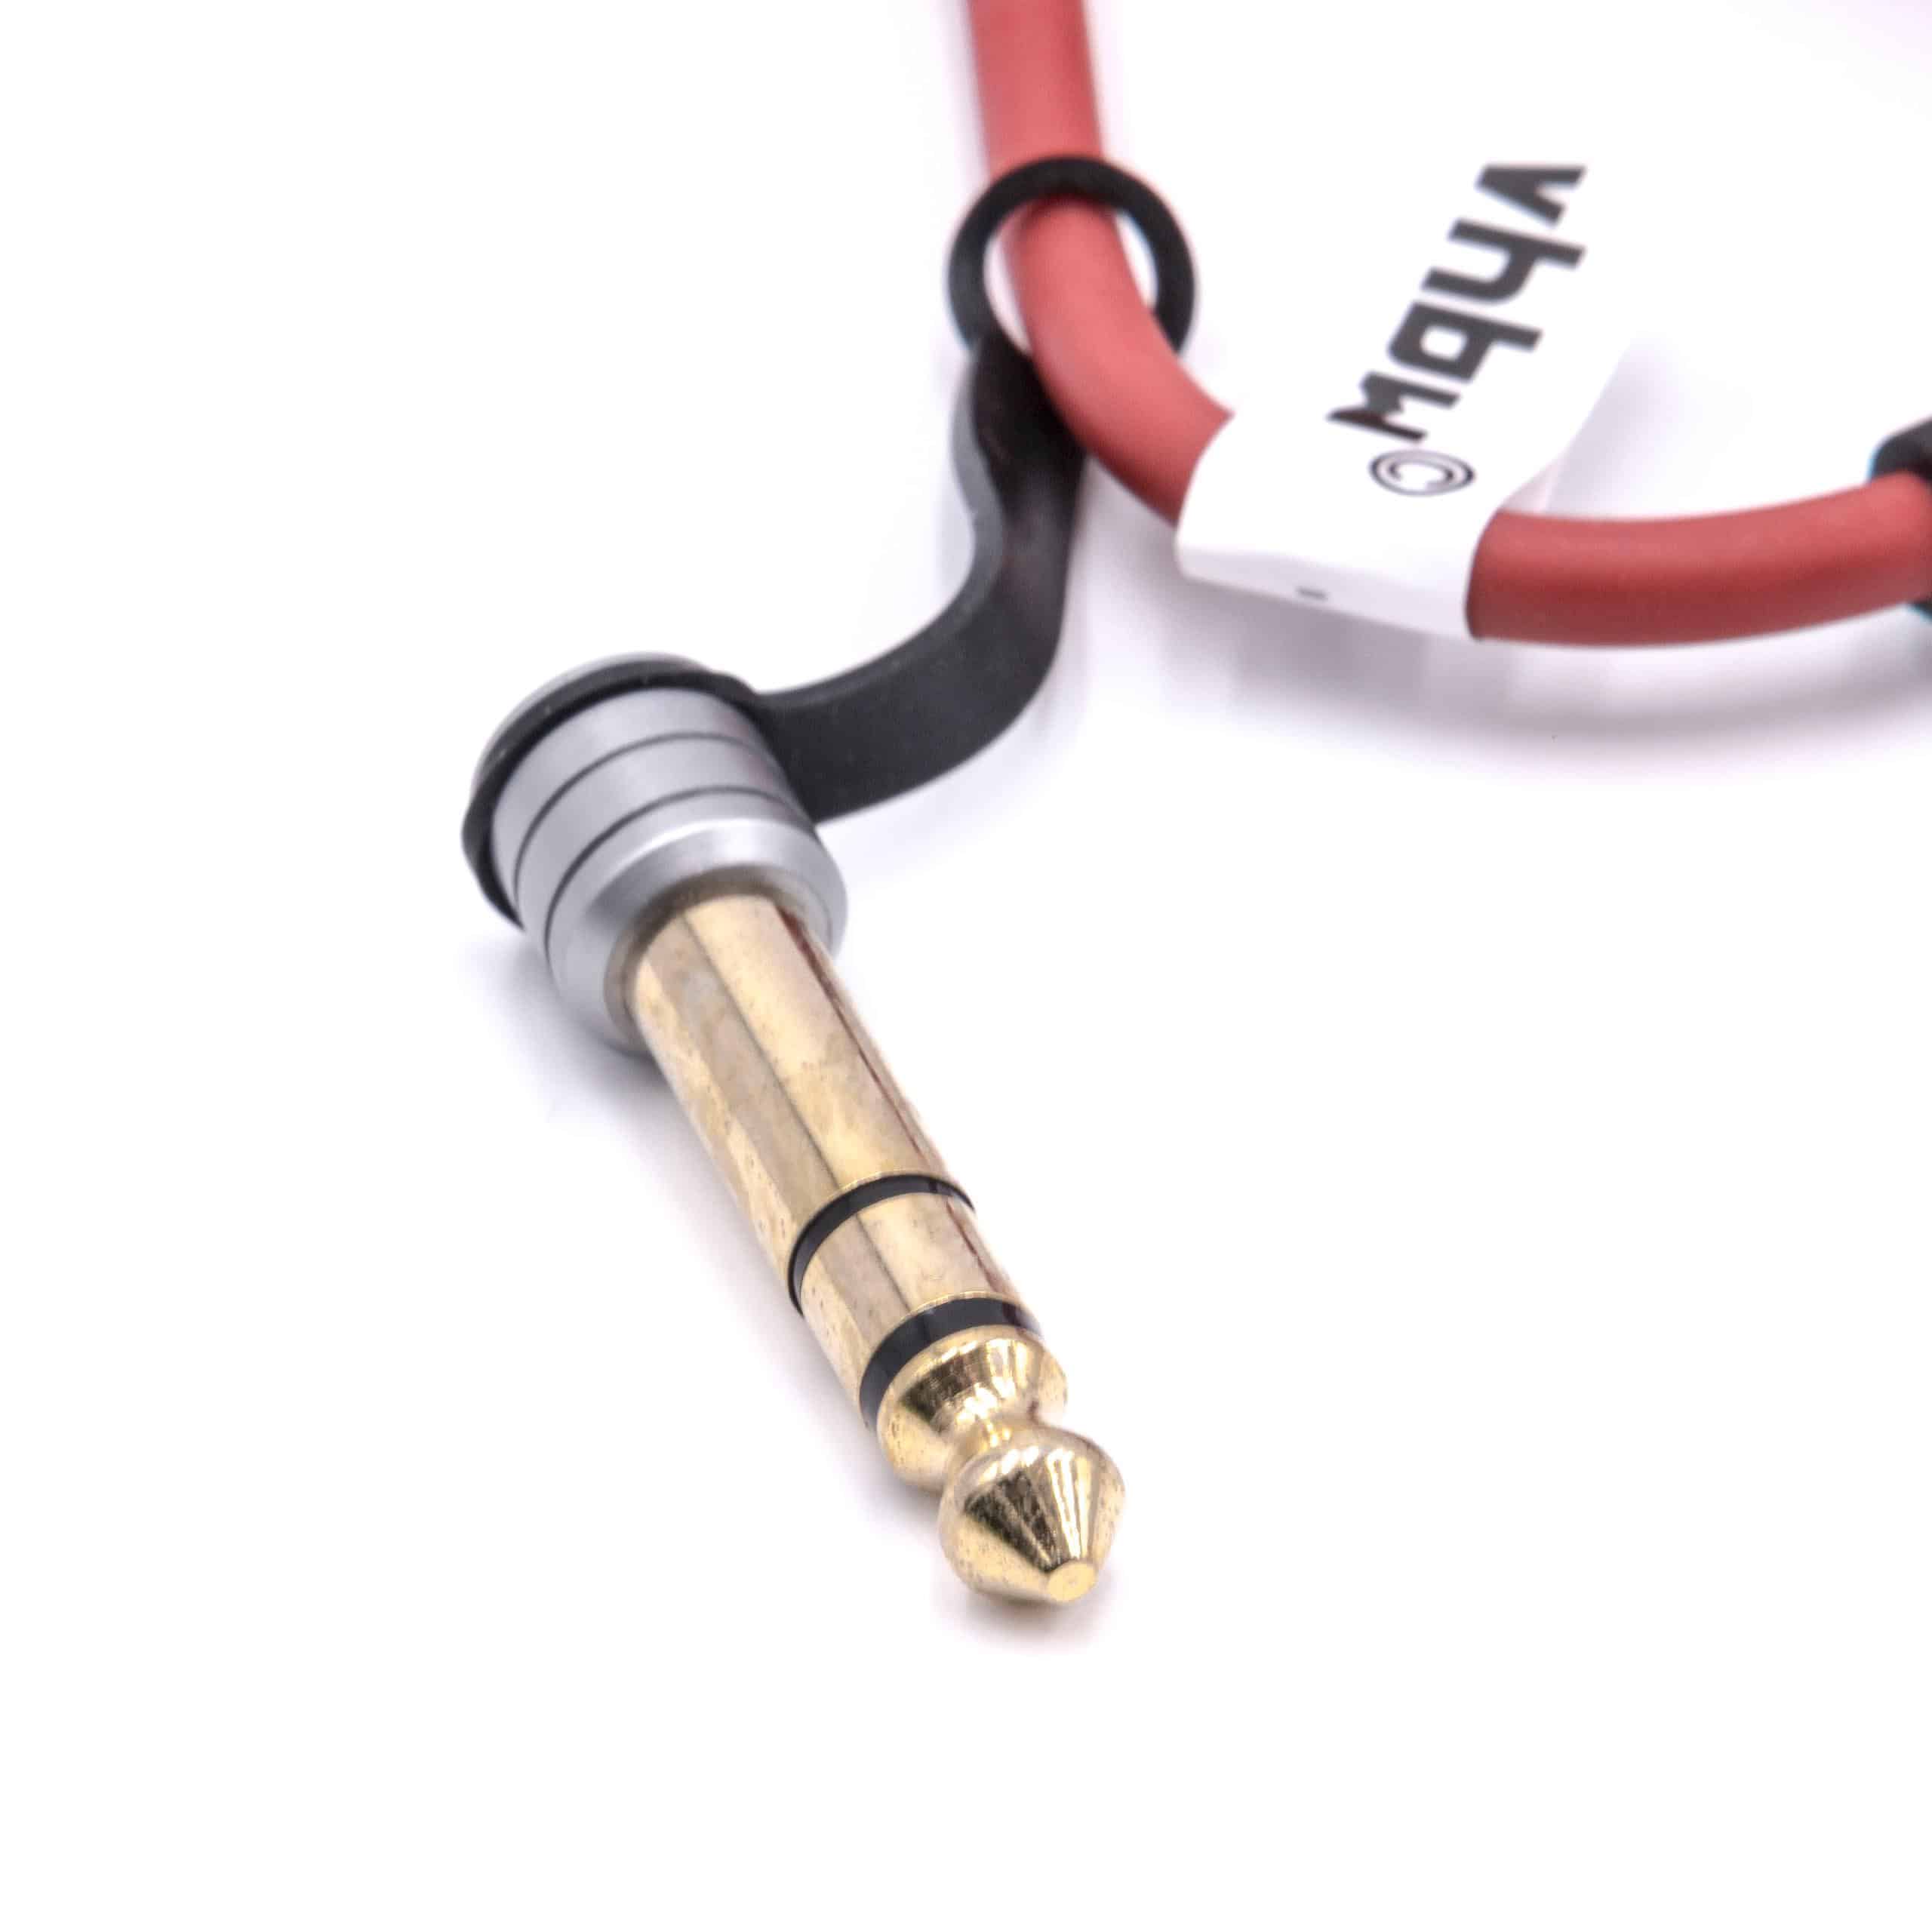 Headphones Cable suitable for Monster Beats by Dr. Dre Beats EP etc., 150 cm